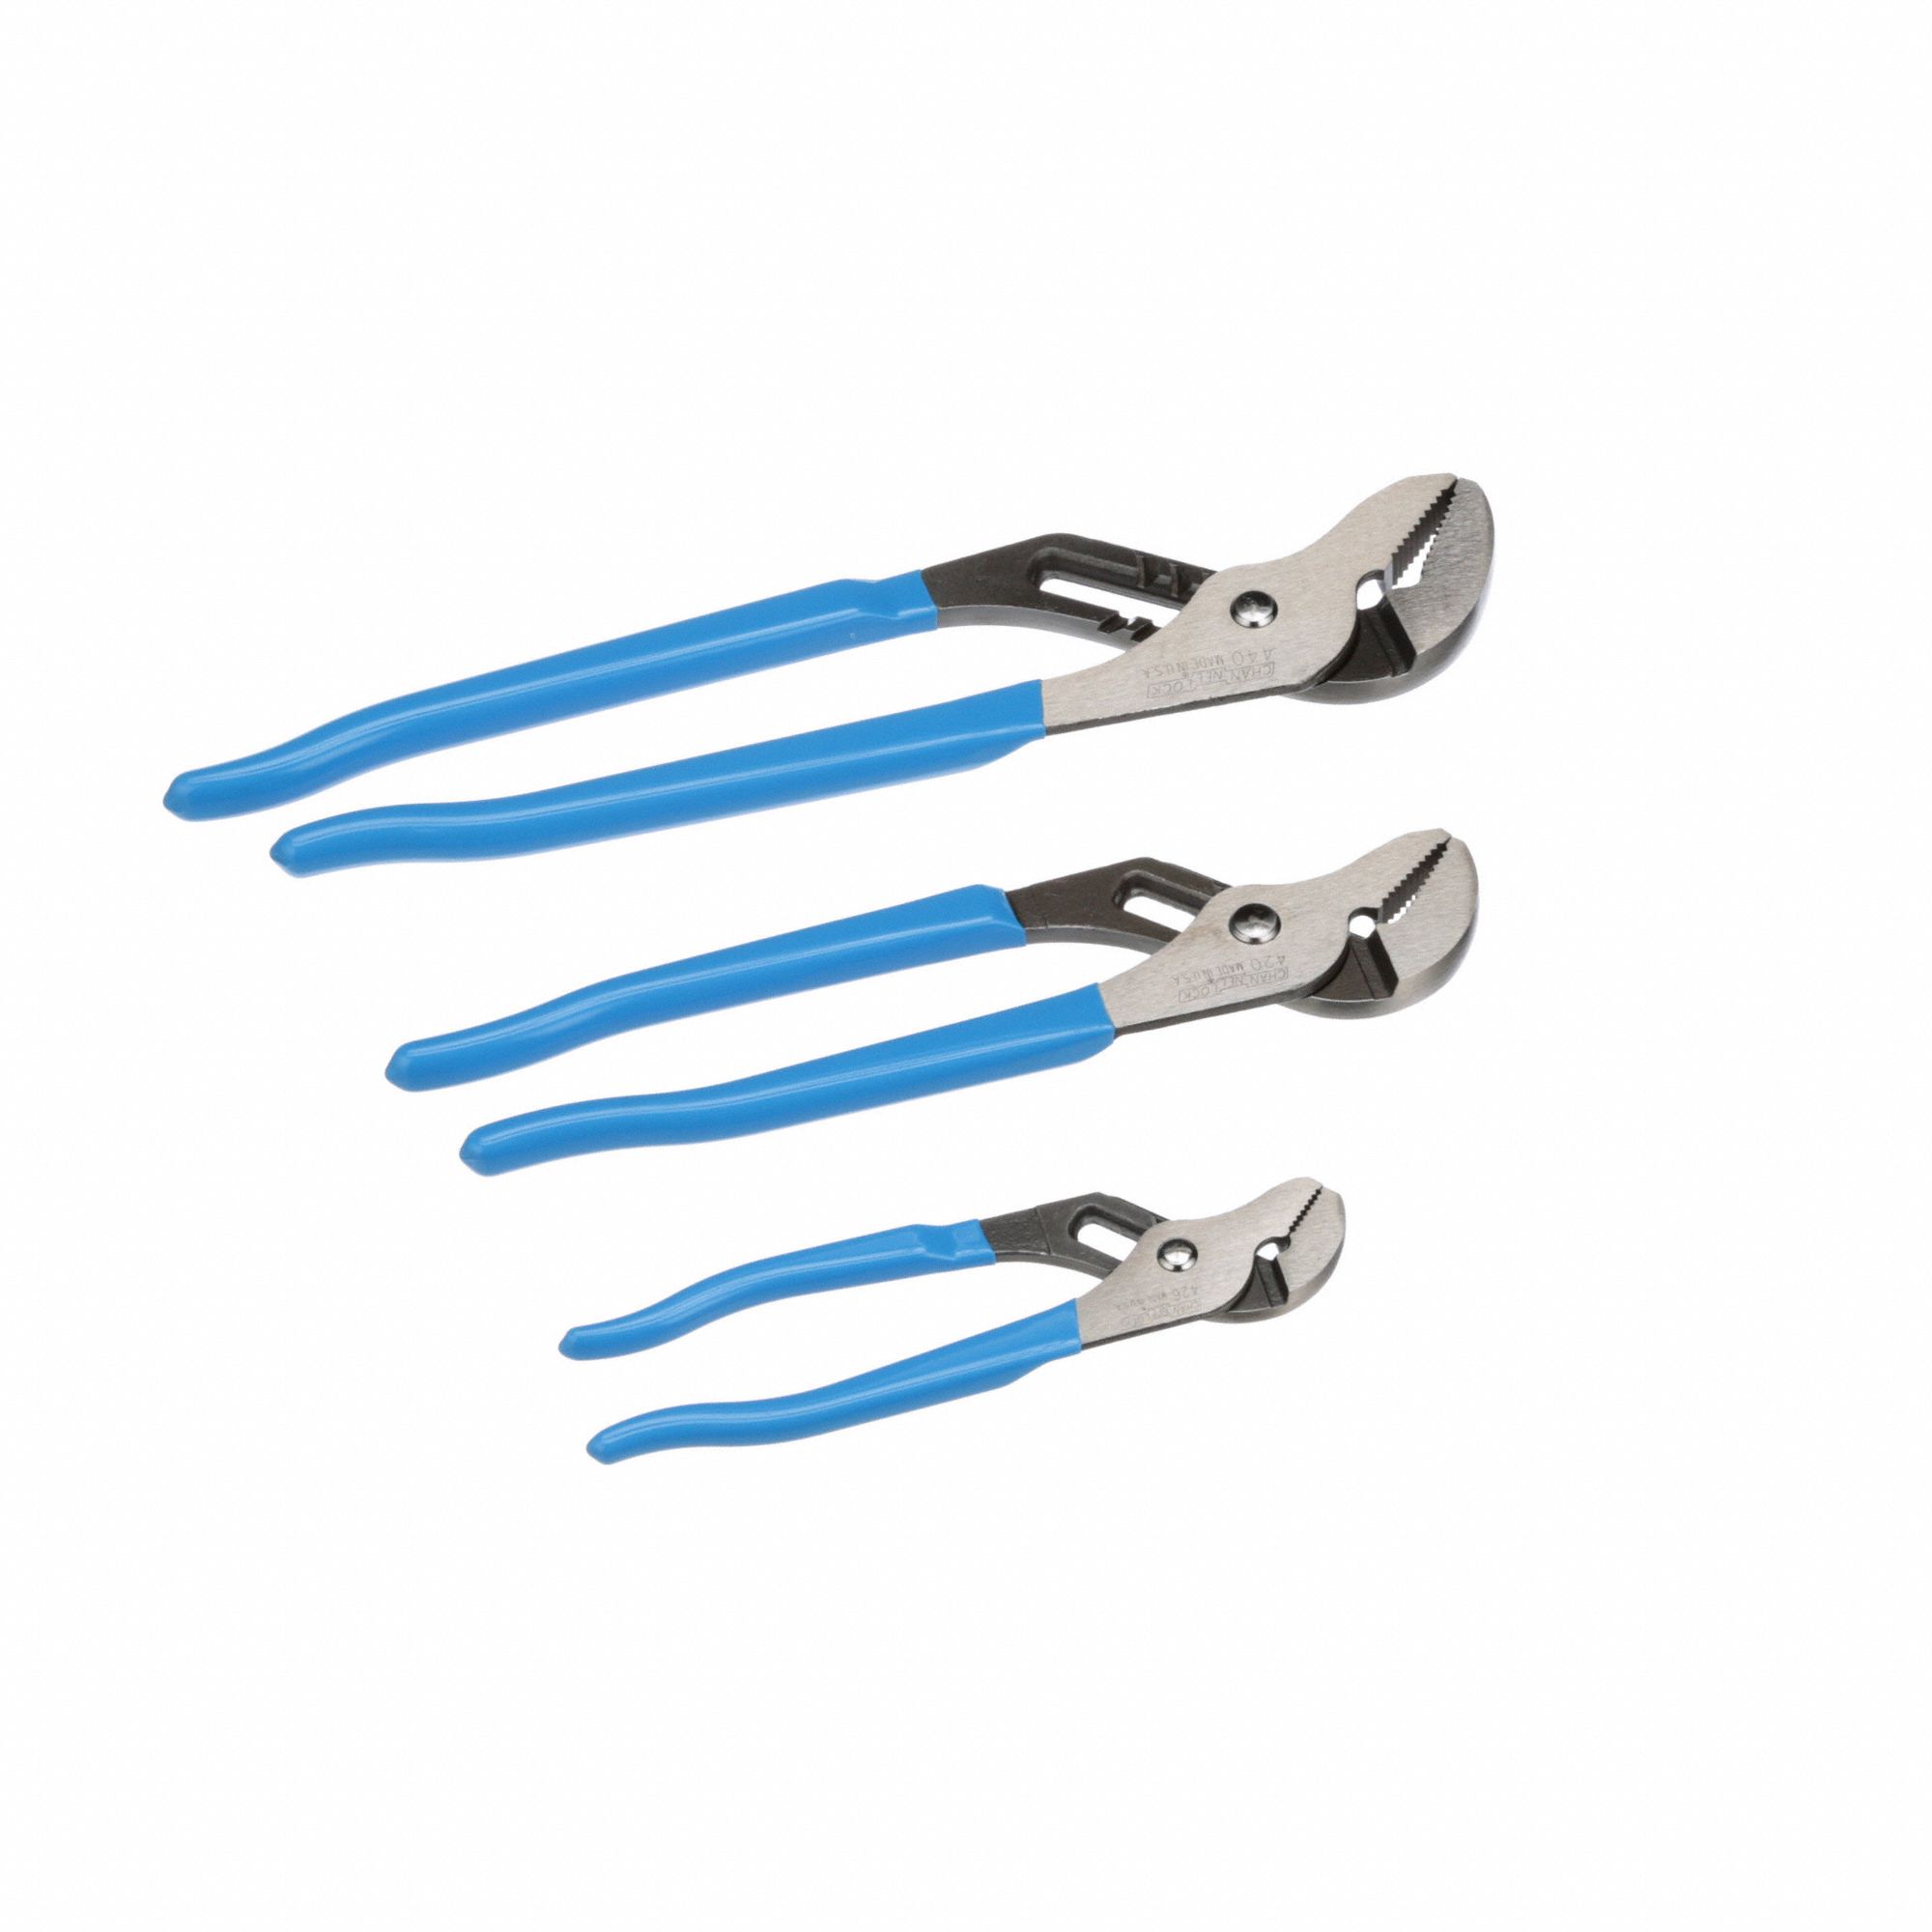 Channellock 3pc Plier Set Long Nose Tongue & Groove Diagonal Cutters Dikes  GS-6 - Bowers Tool Co.